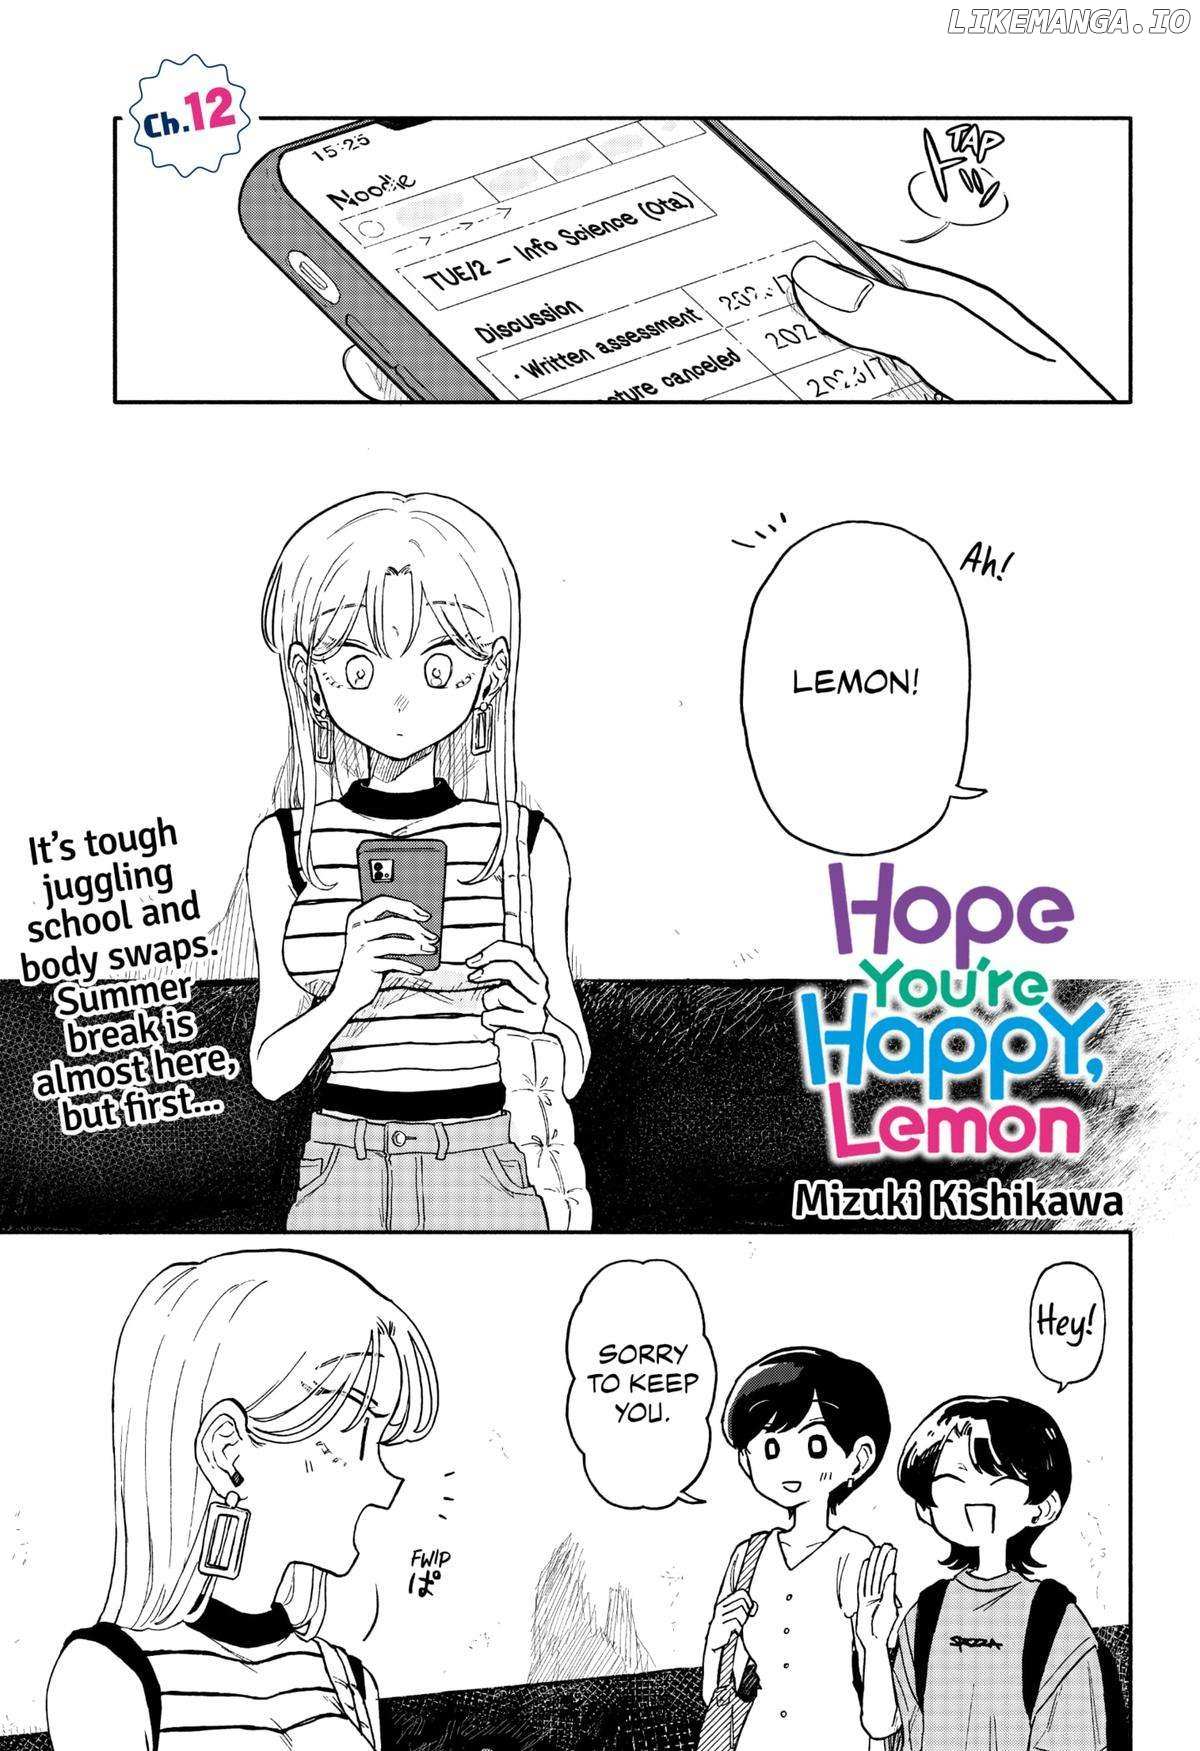 Hope You're Happy, Lemon - Page 1